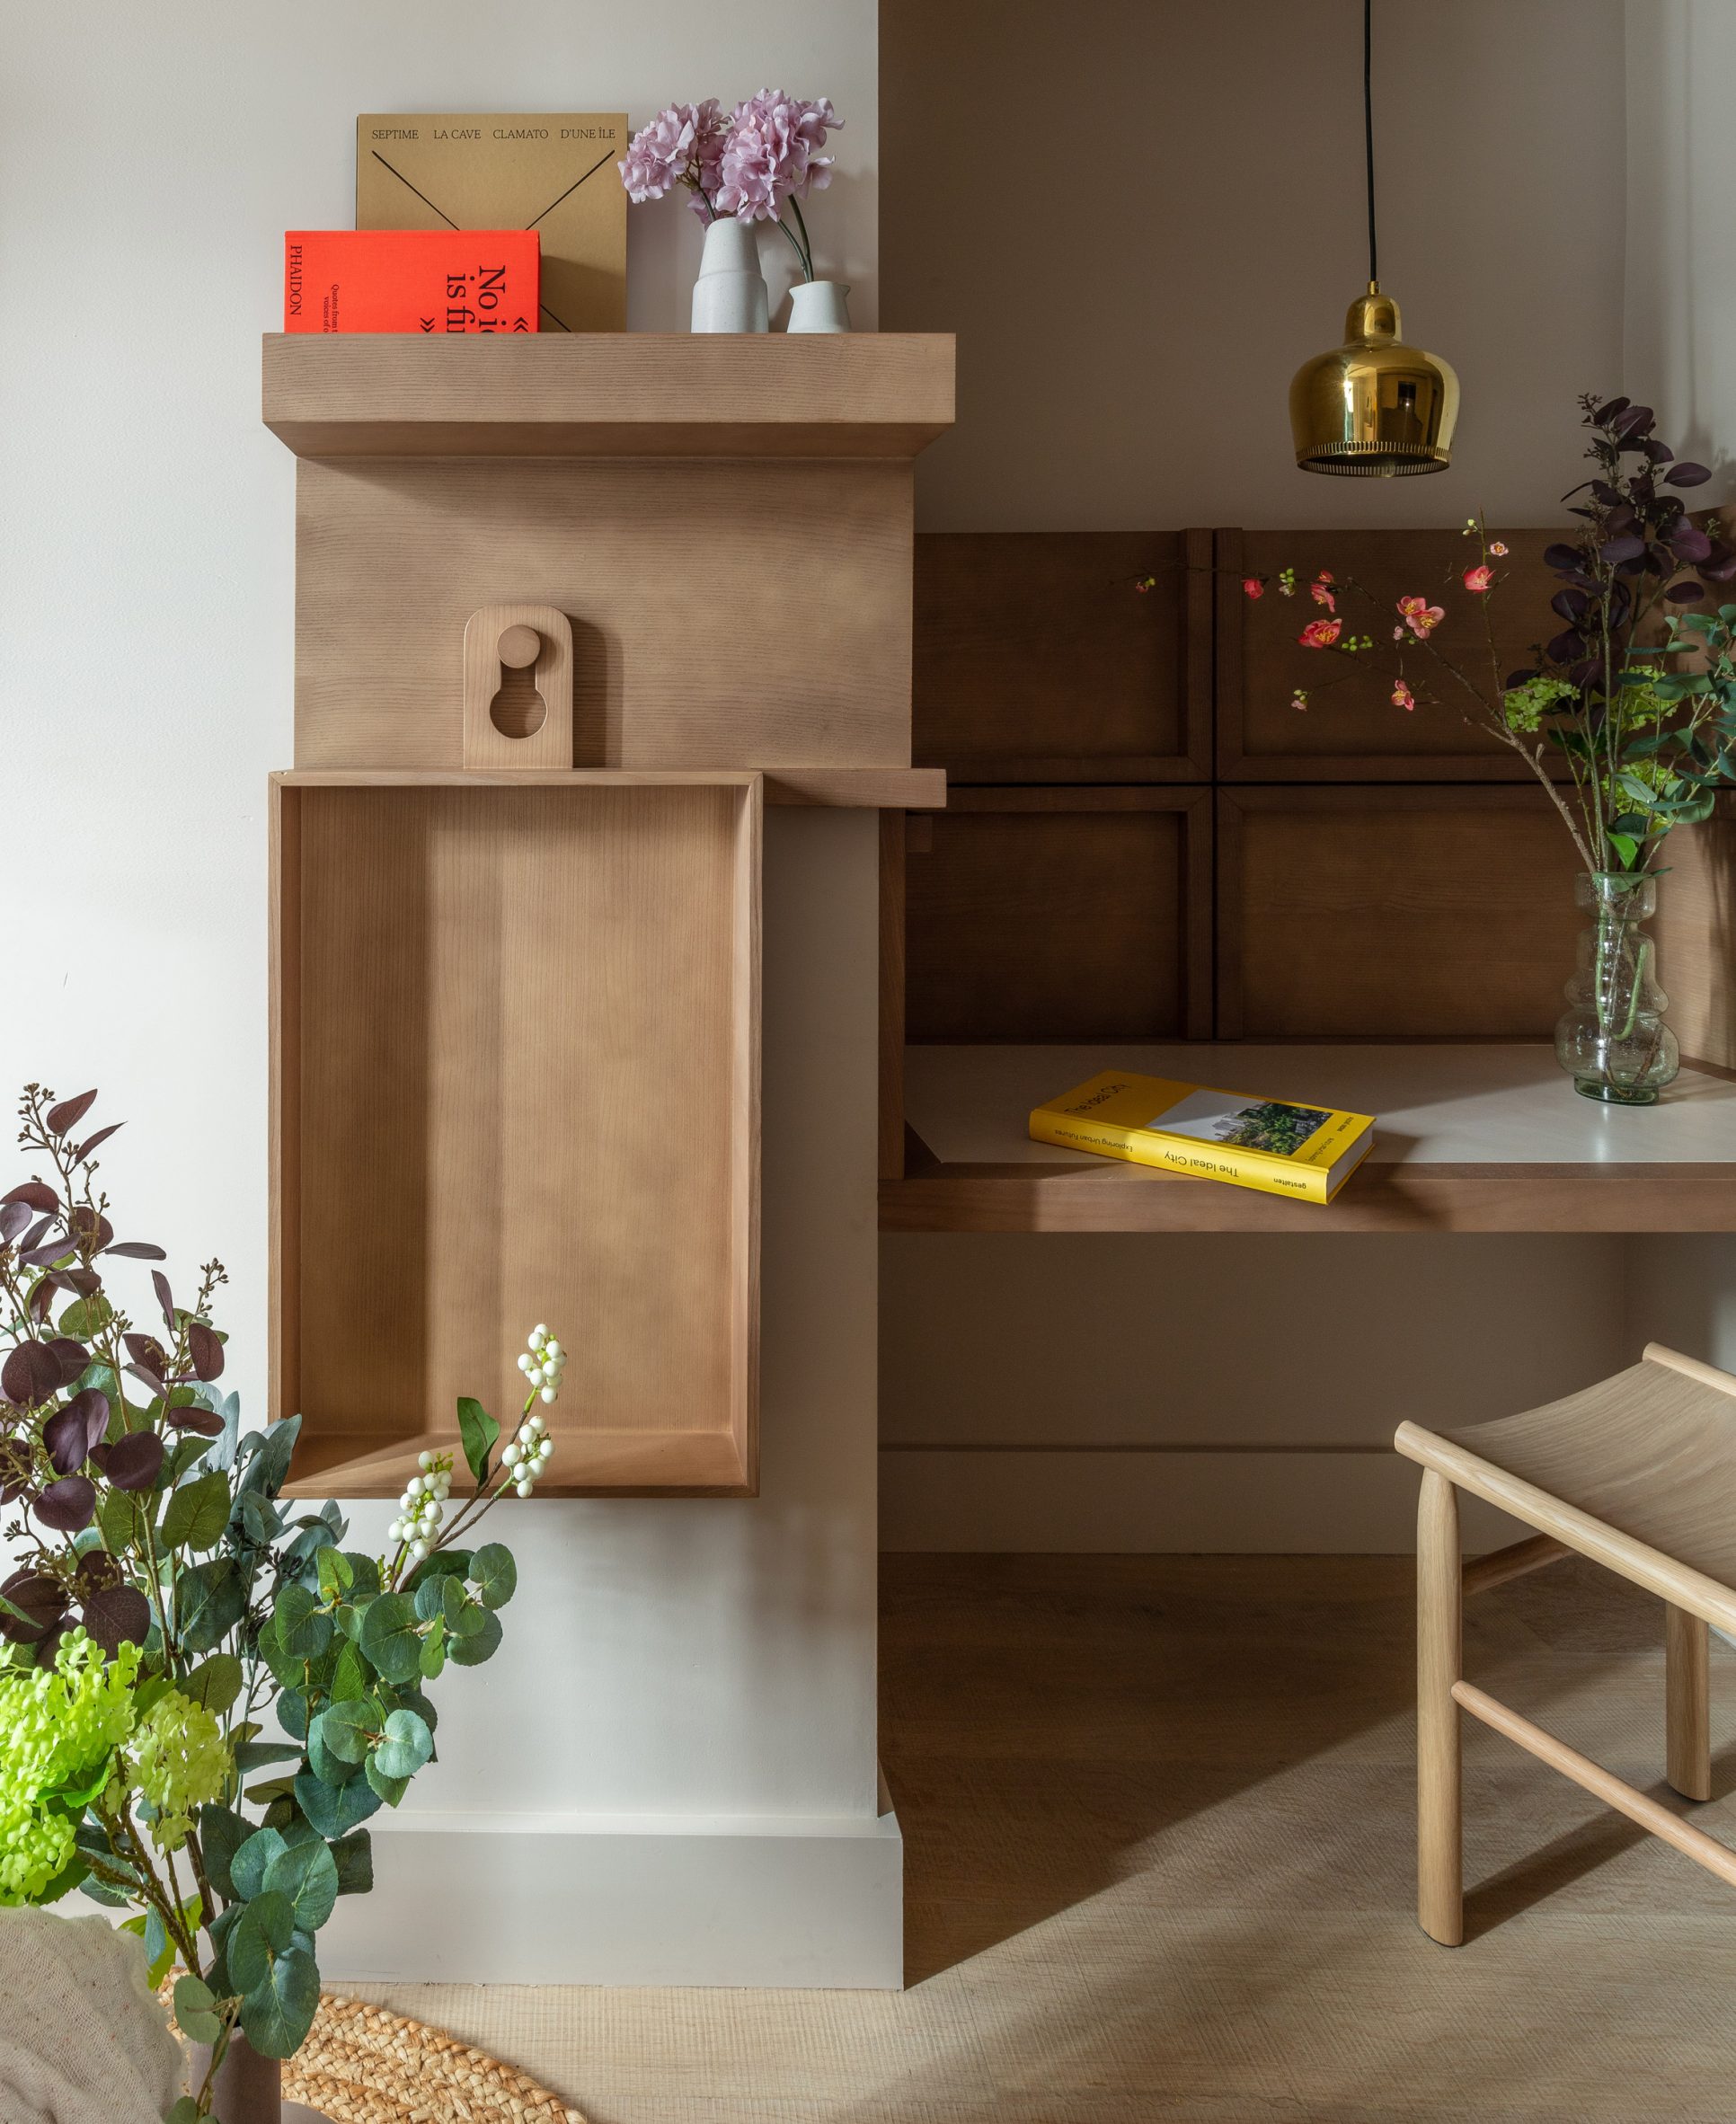 Desk and shelves in bedroom of Buckle Street Studios by Grzywinski+Pons for Locke hotels